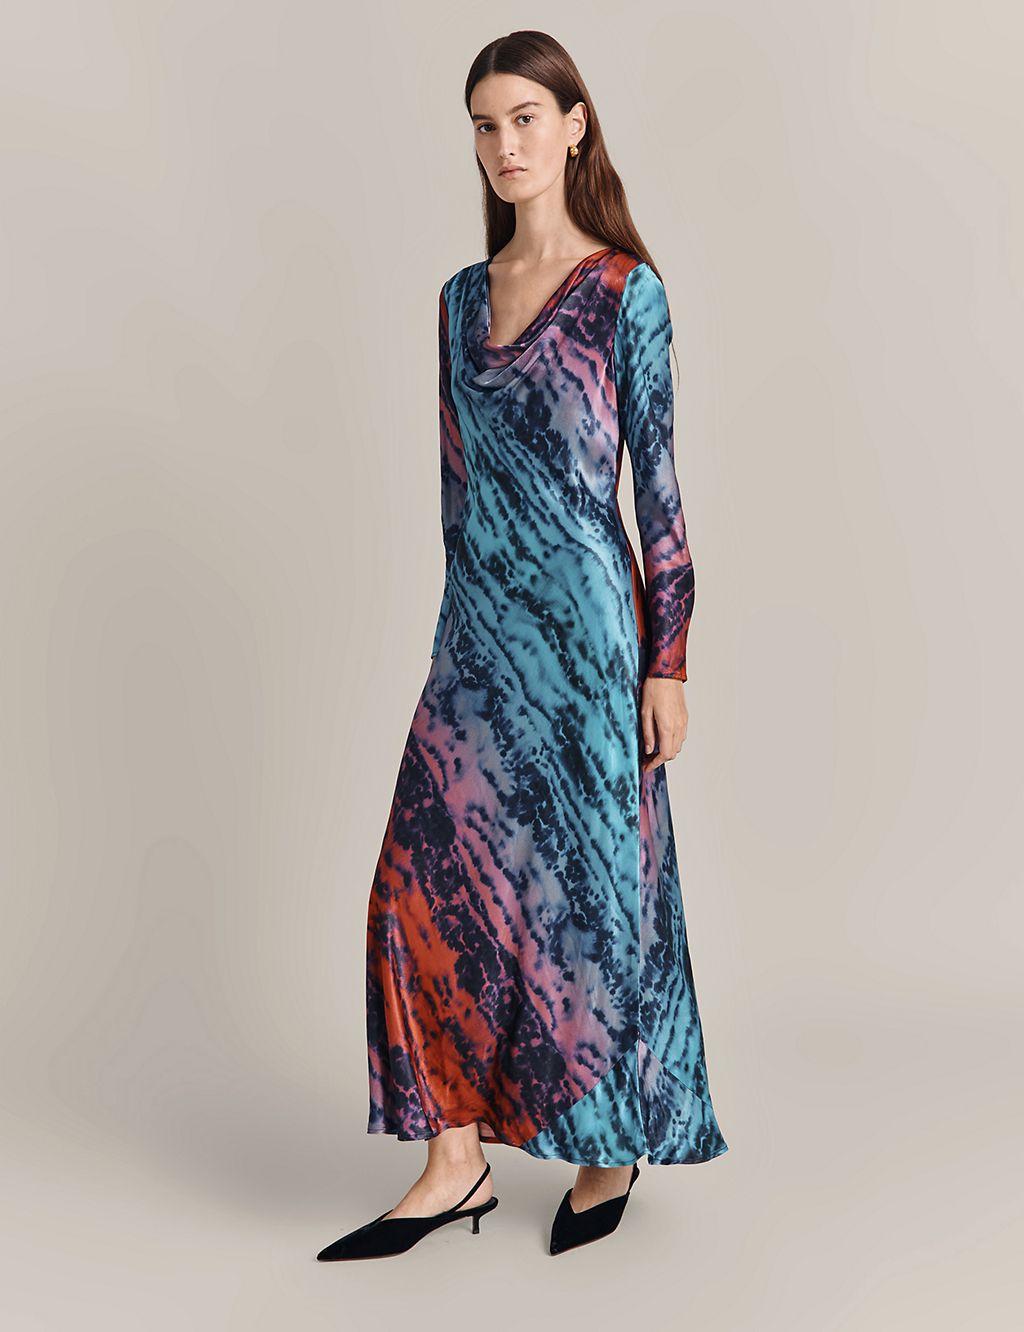 Satin Tie Dye Cowl Neck Midi Column Dress 1 of 4